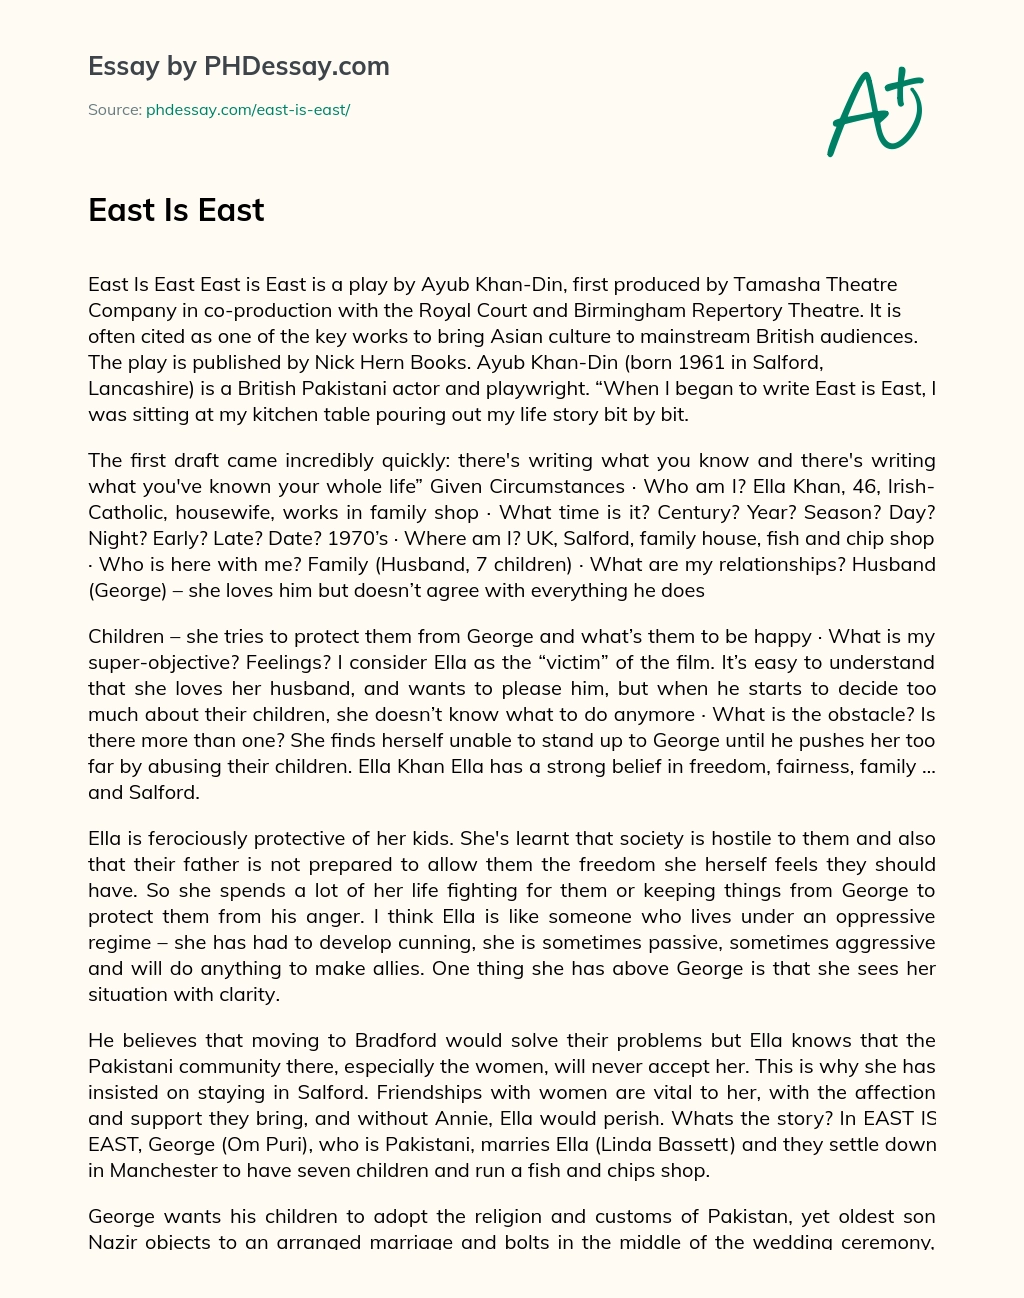 East Is East essay